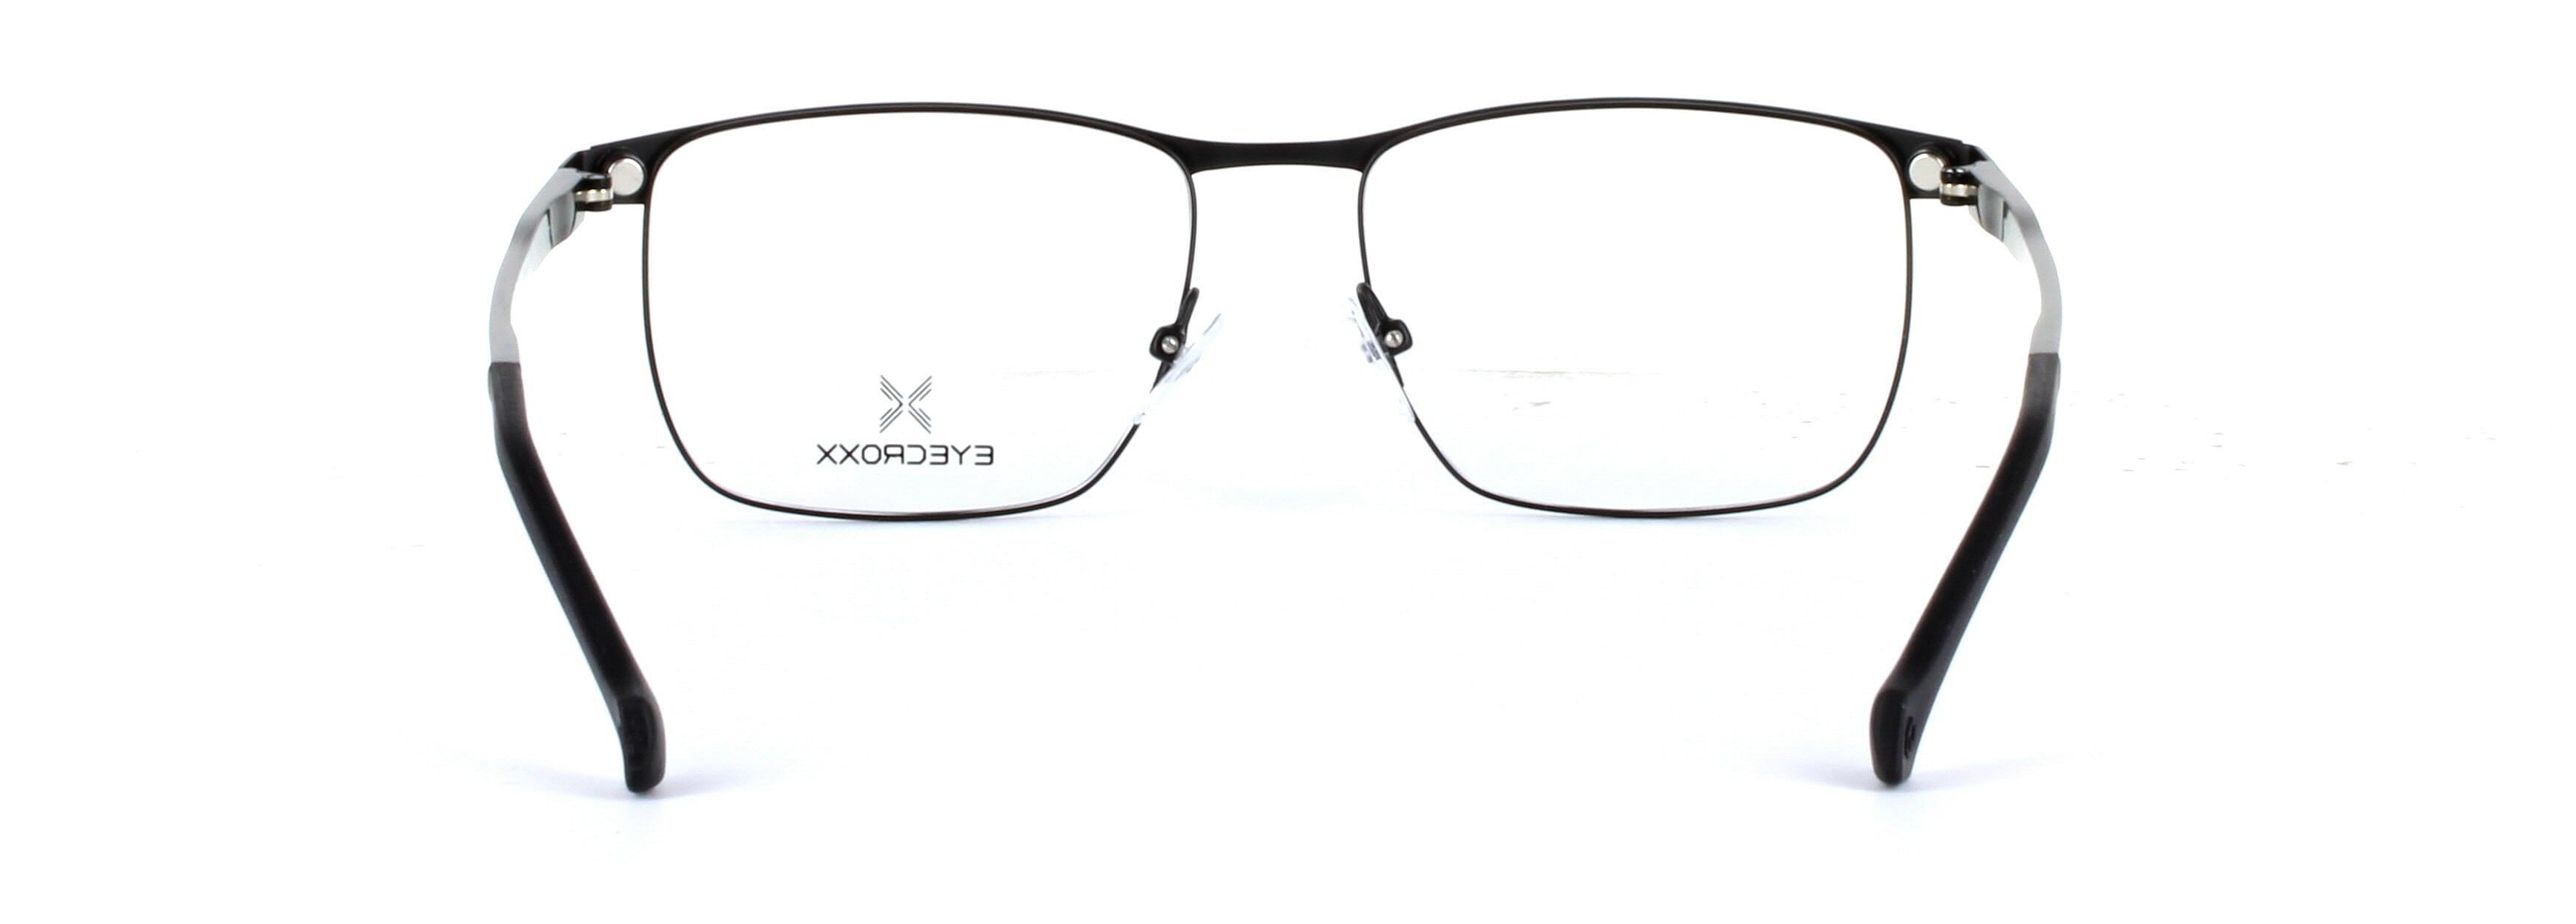 Eyecroxx 601-C2 Black Full Rim Metal Glasses - Image View 3